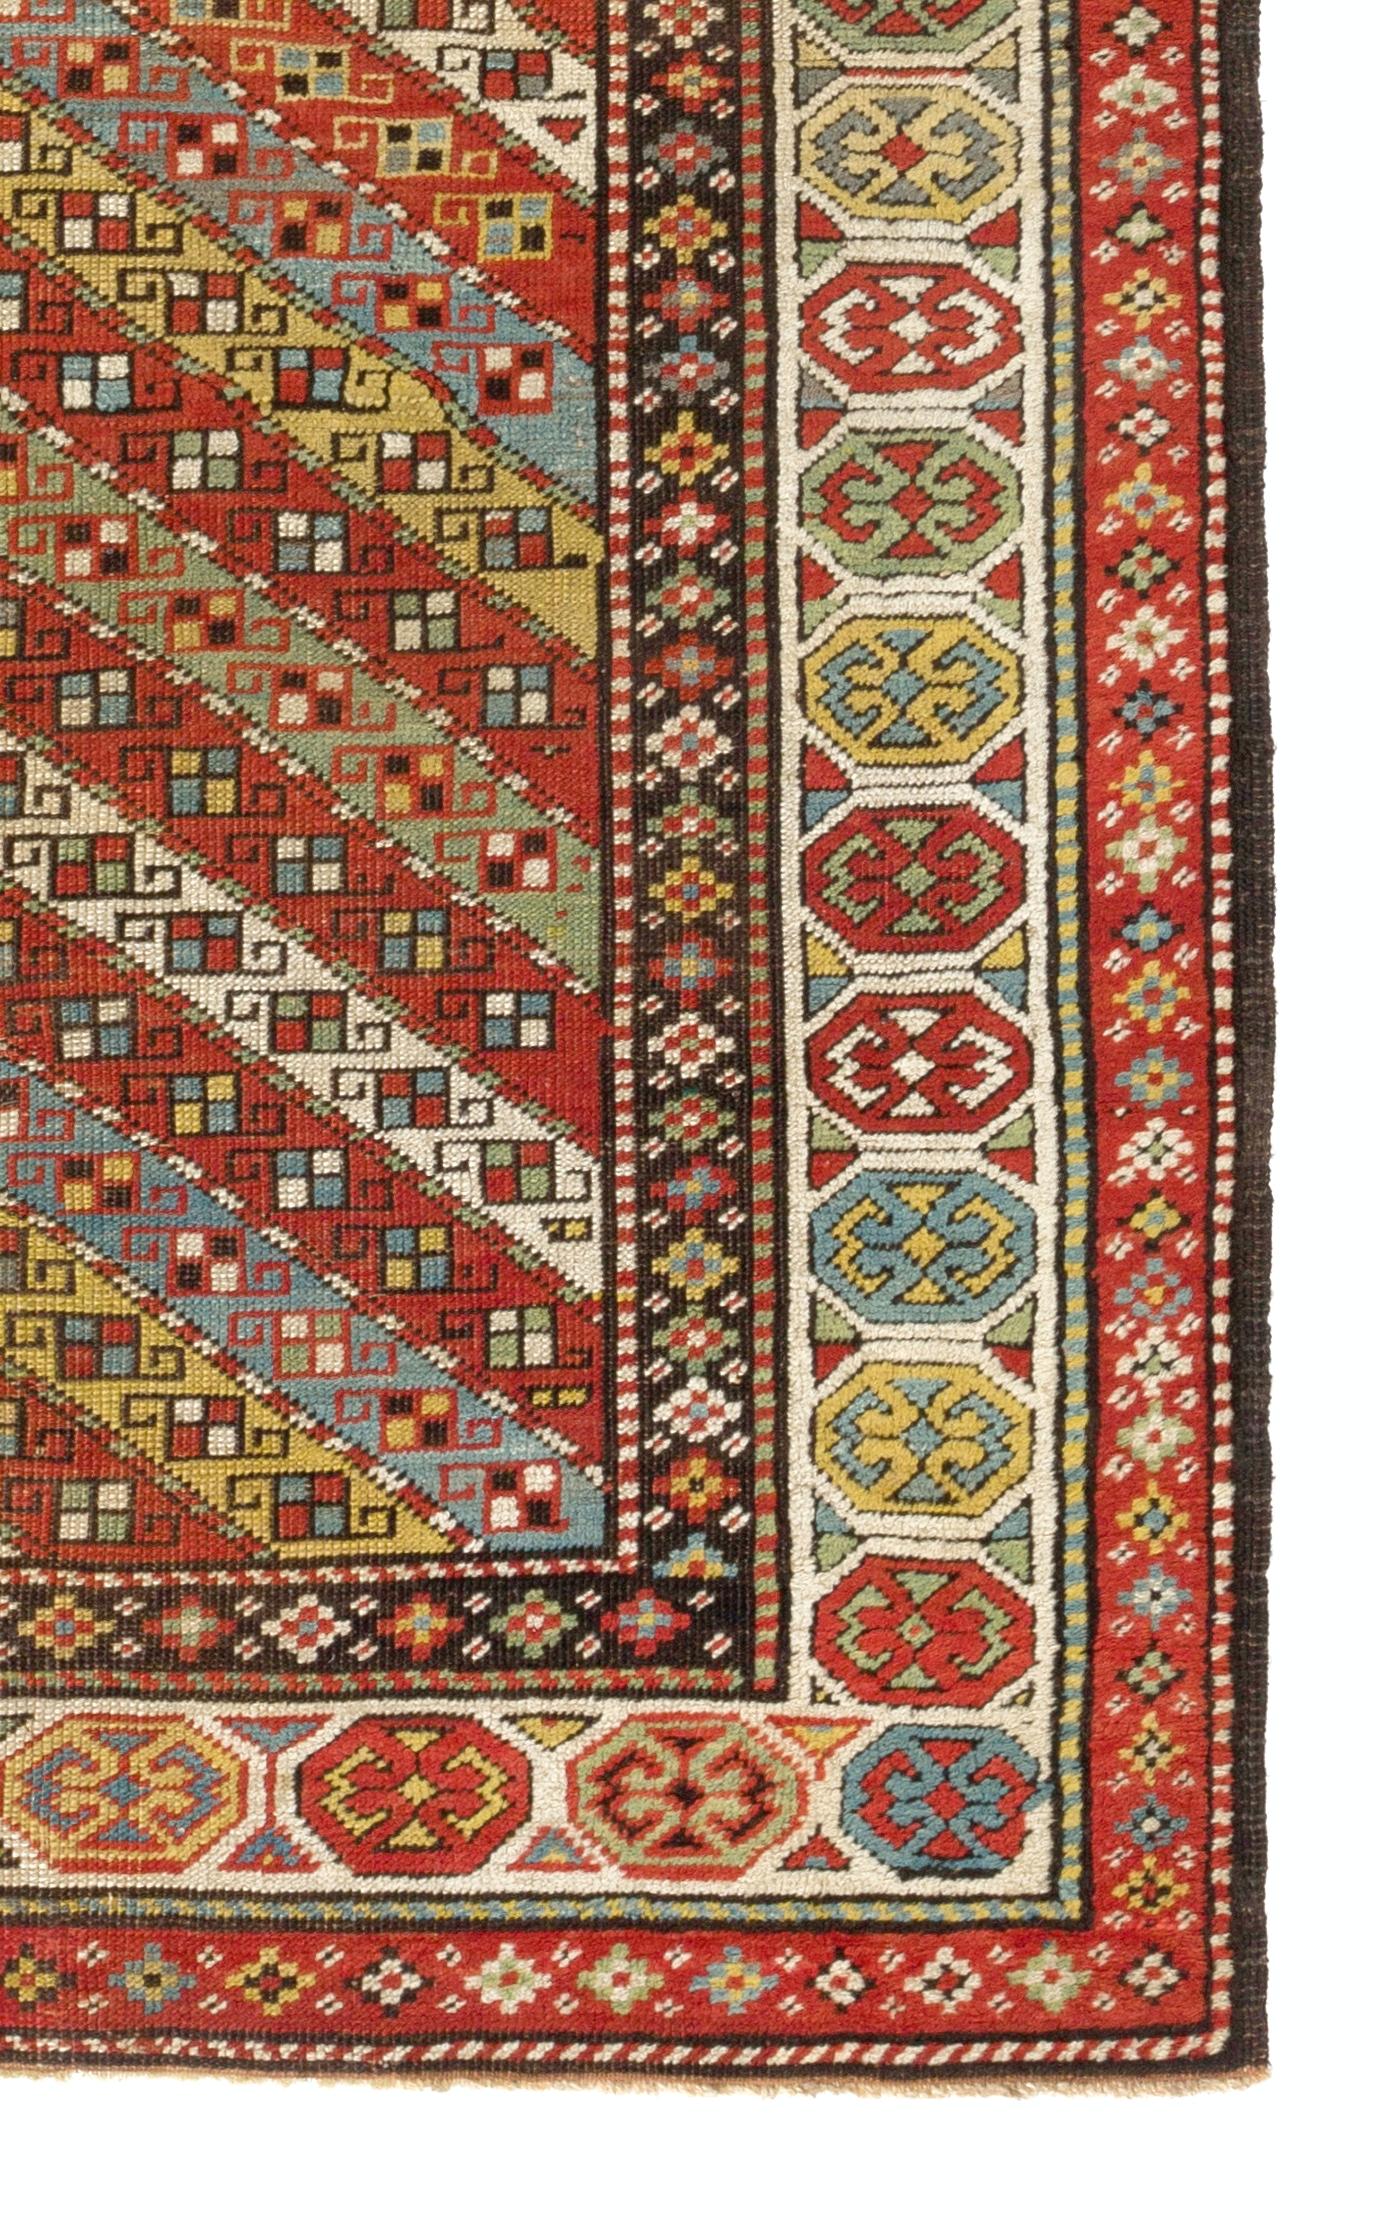 Late 19th Century 3.9x6.6 Ft  Antique Caucasian Gendje Rug Colorful Diagonal Stripes, circa 1875 For Sale